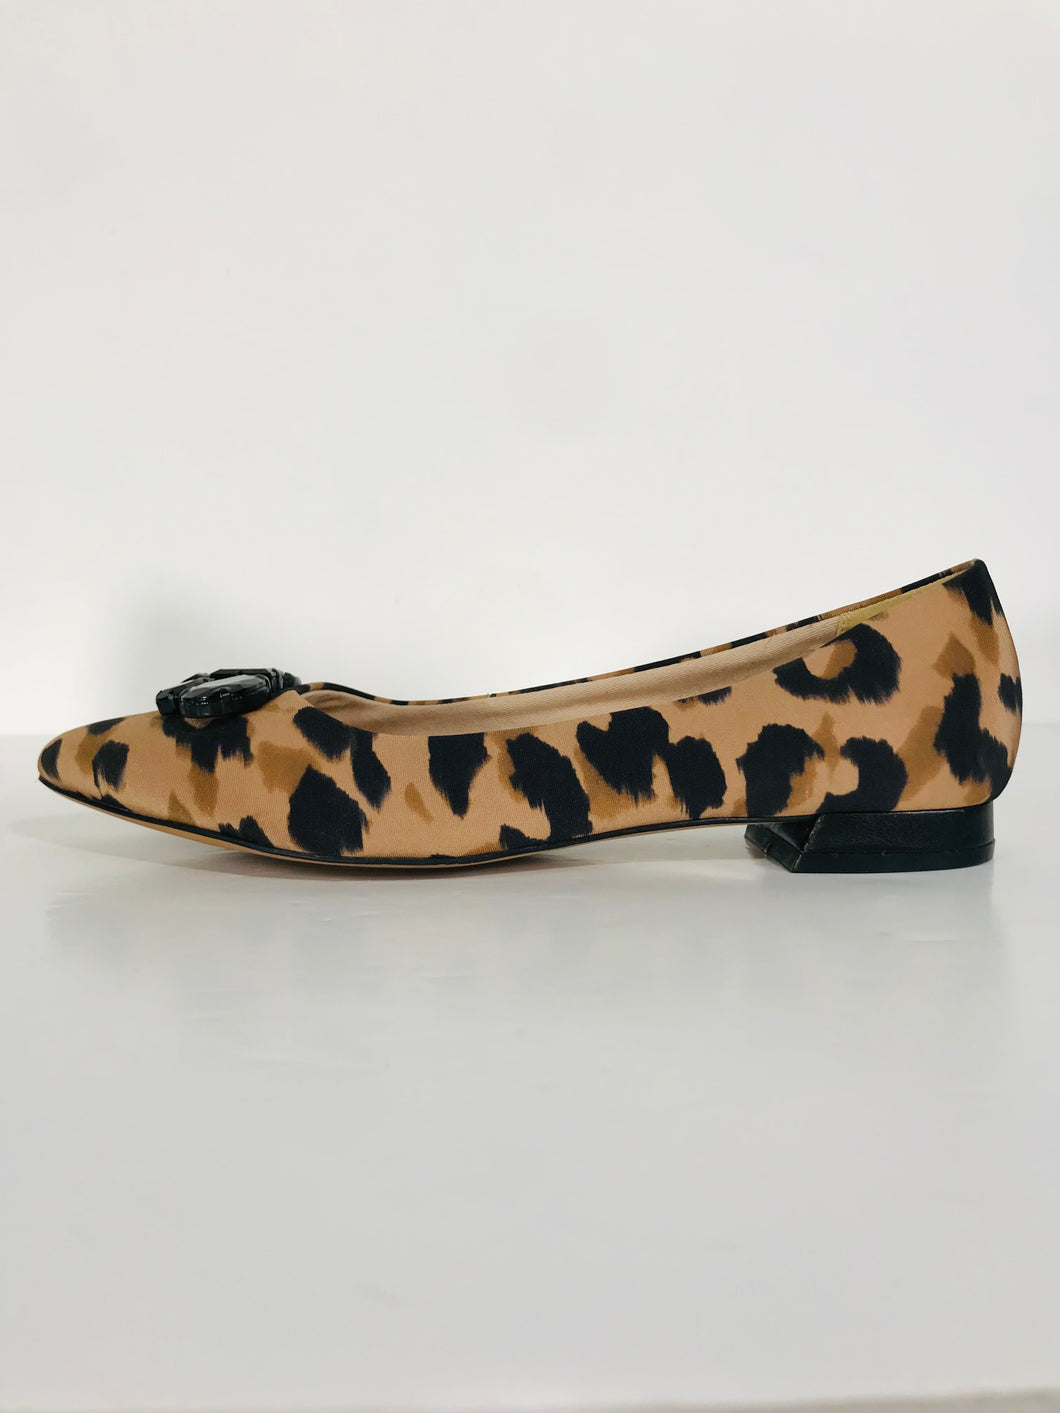 Clarks Women's Leopard Print Flats Shoes | UK6 | Brown